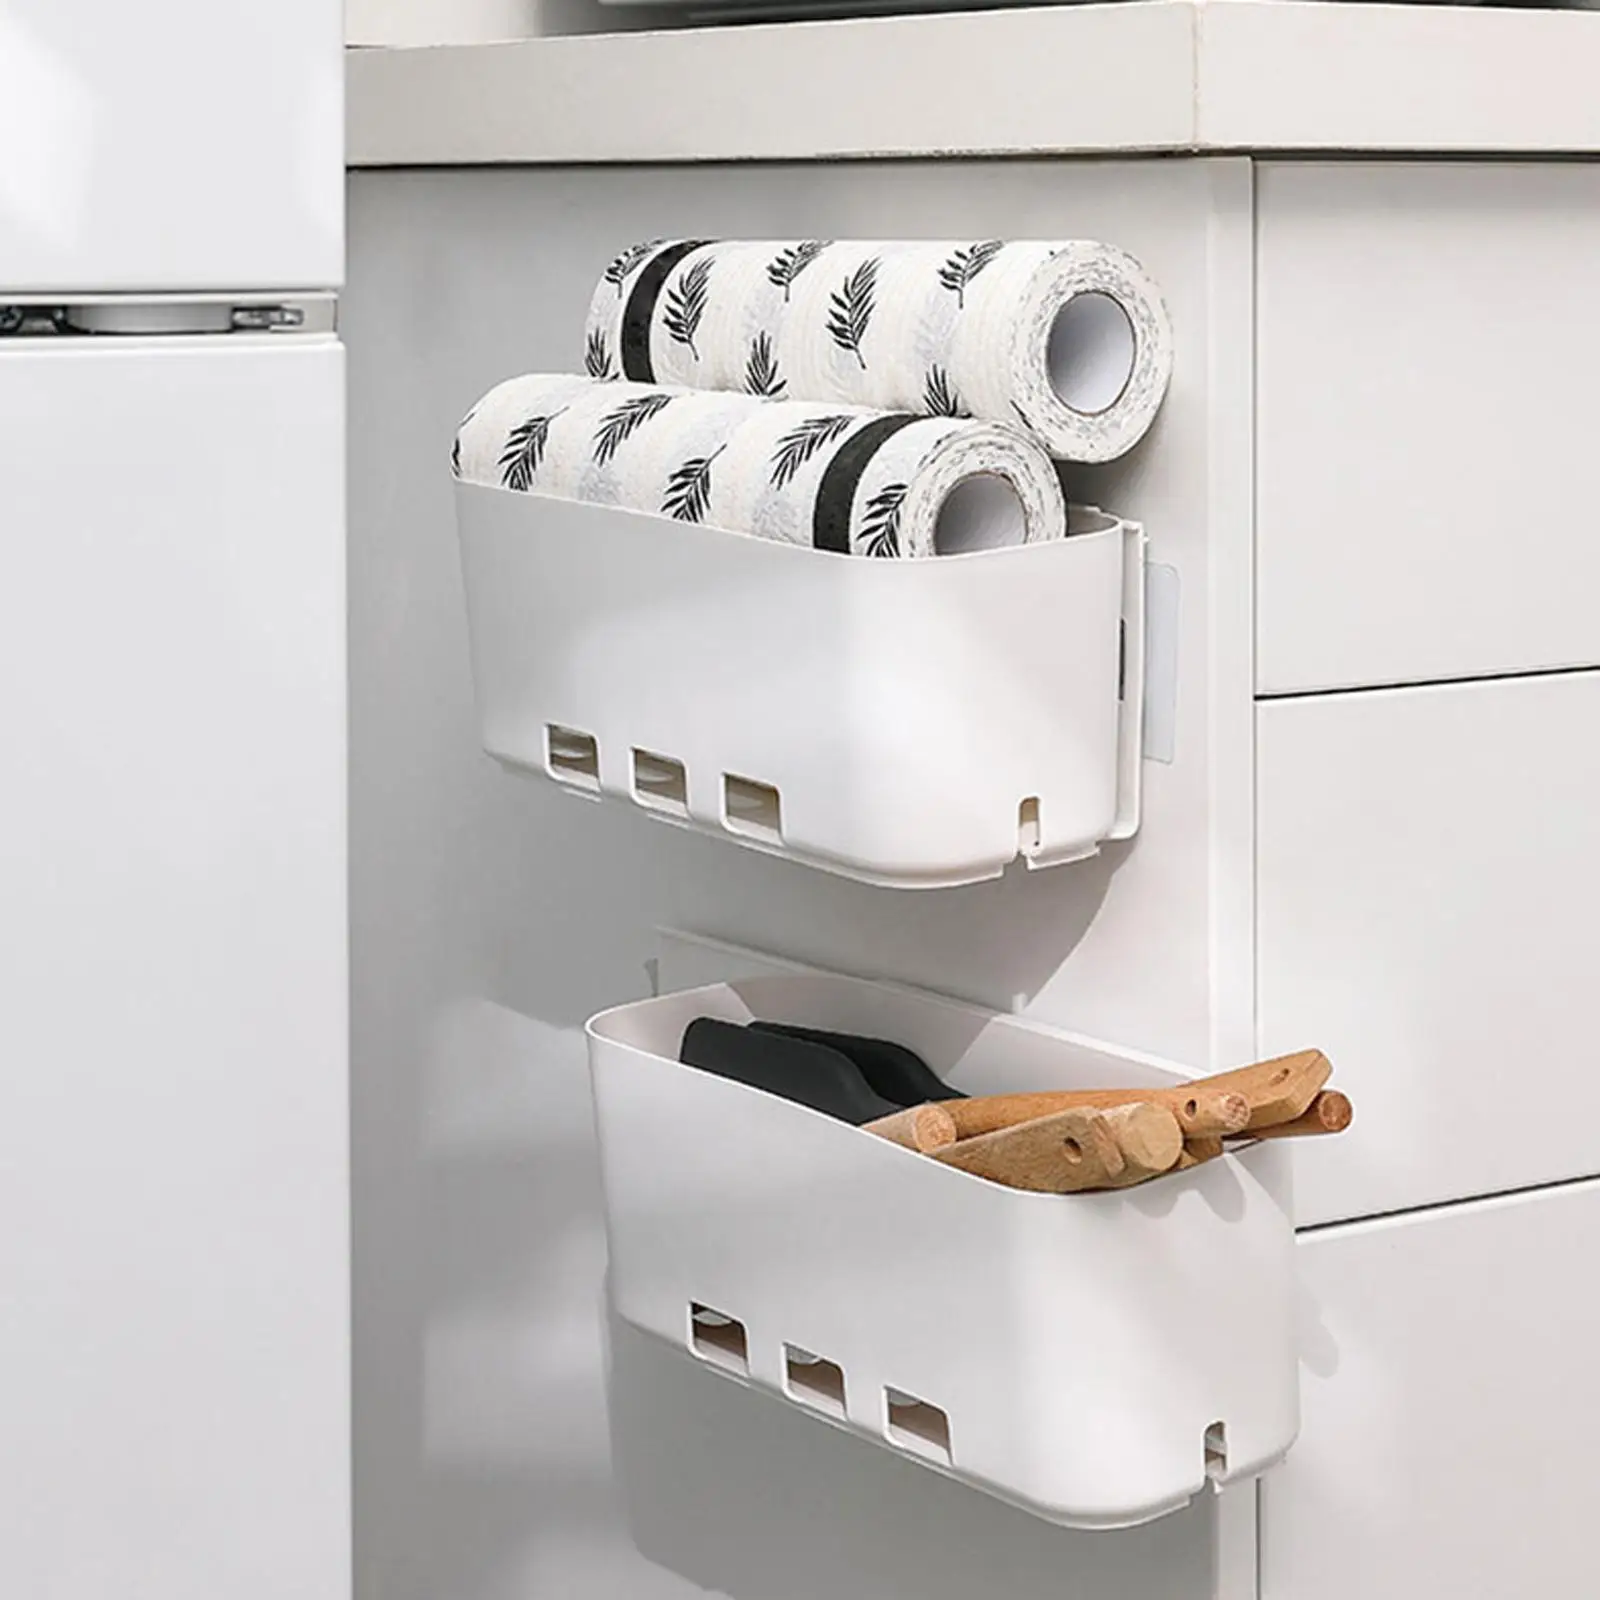 Multifunction Sliding Cabinet Basket Shower Shelf Organizer Baskets Organizer with Guide Rail for Bathroom Pantry Home